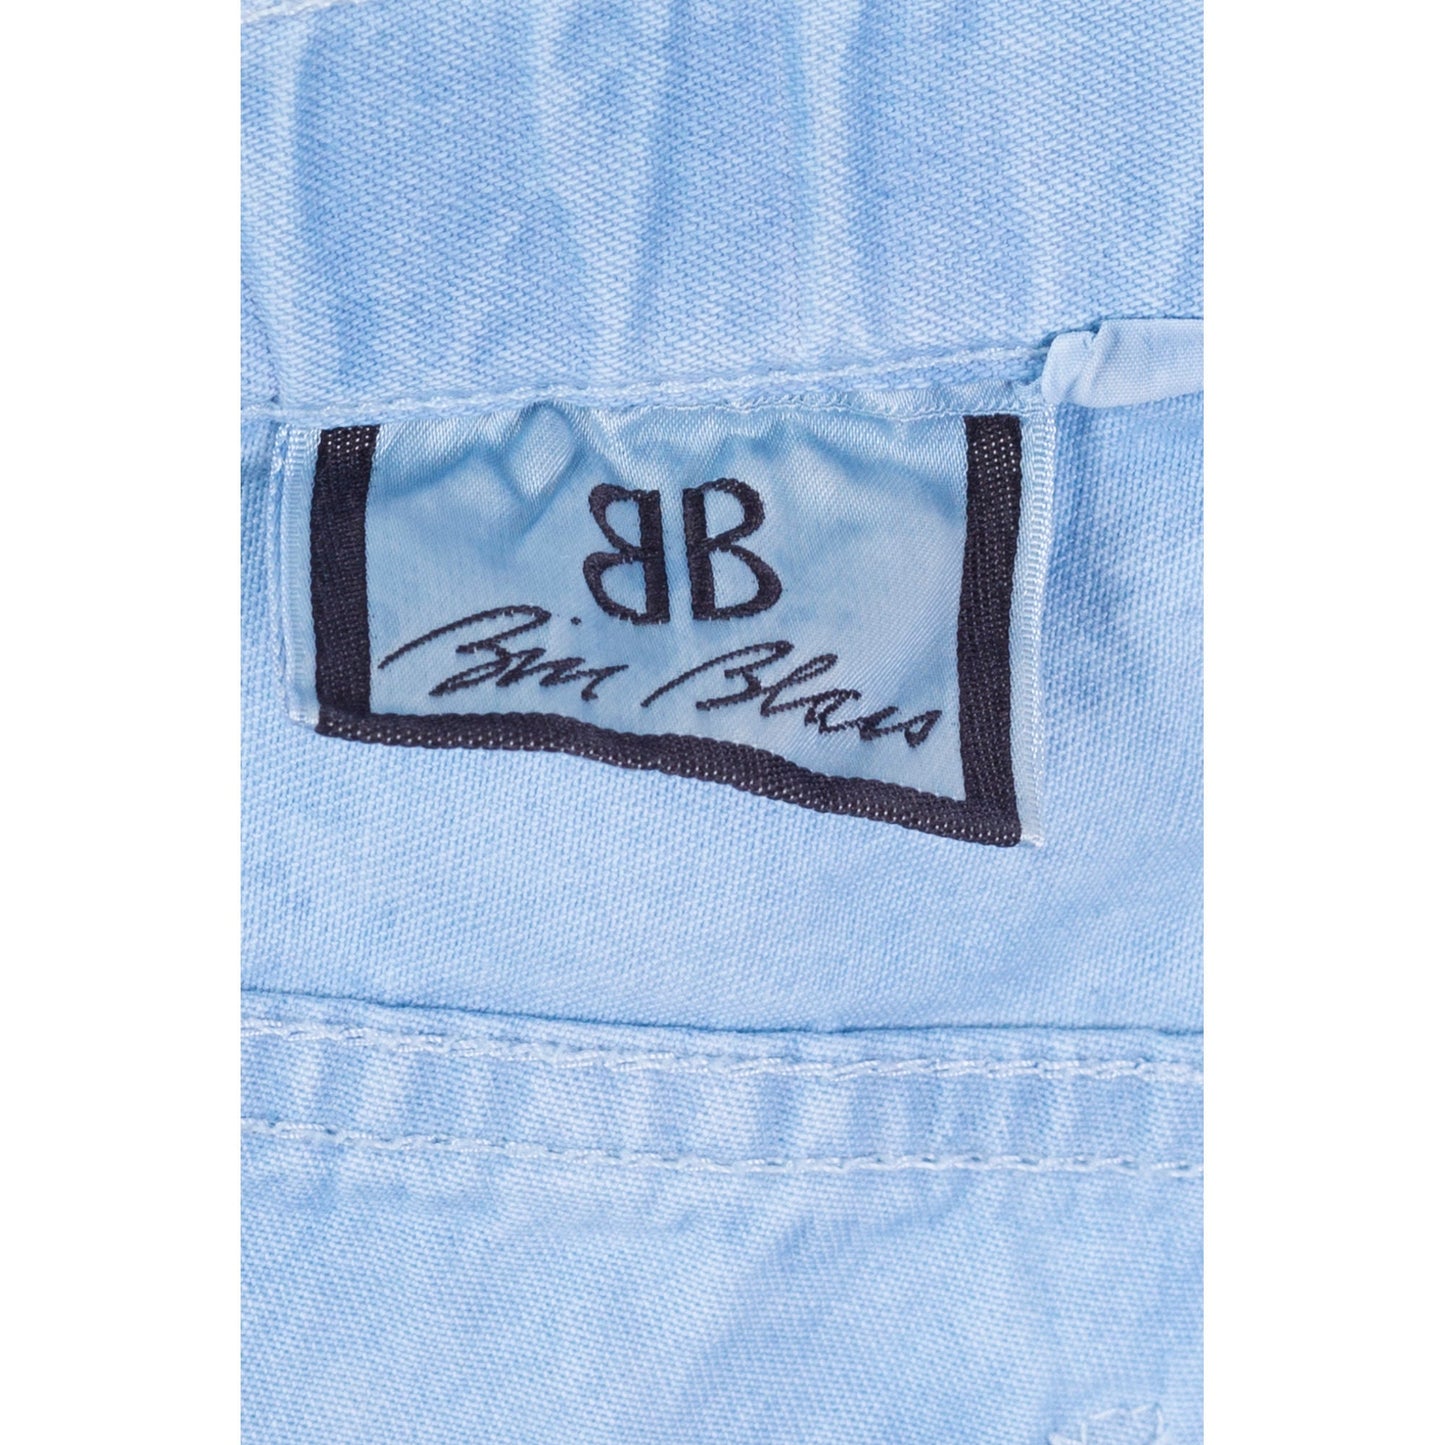 90s Bill Blass Indigo Dyed Denim Jeans - Small, 26"-27" 